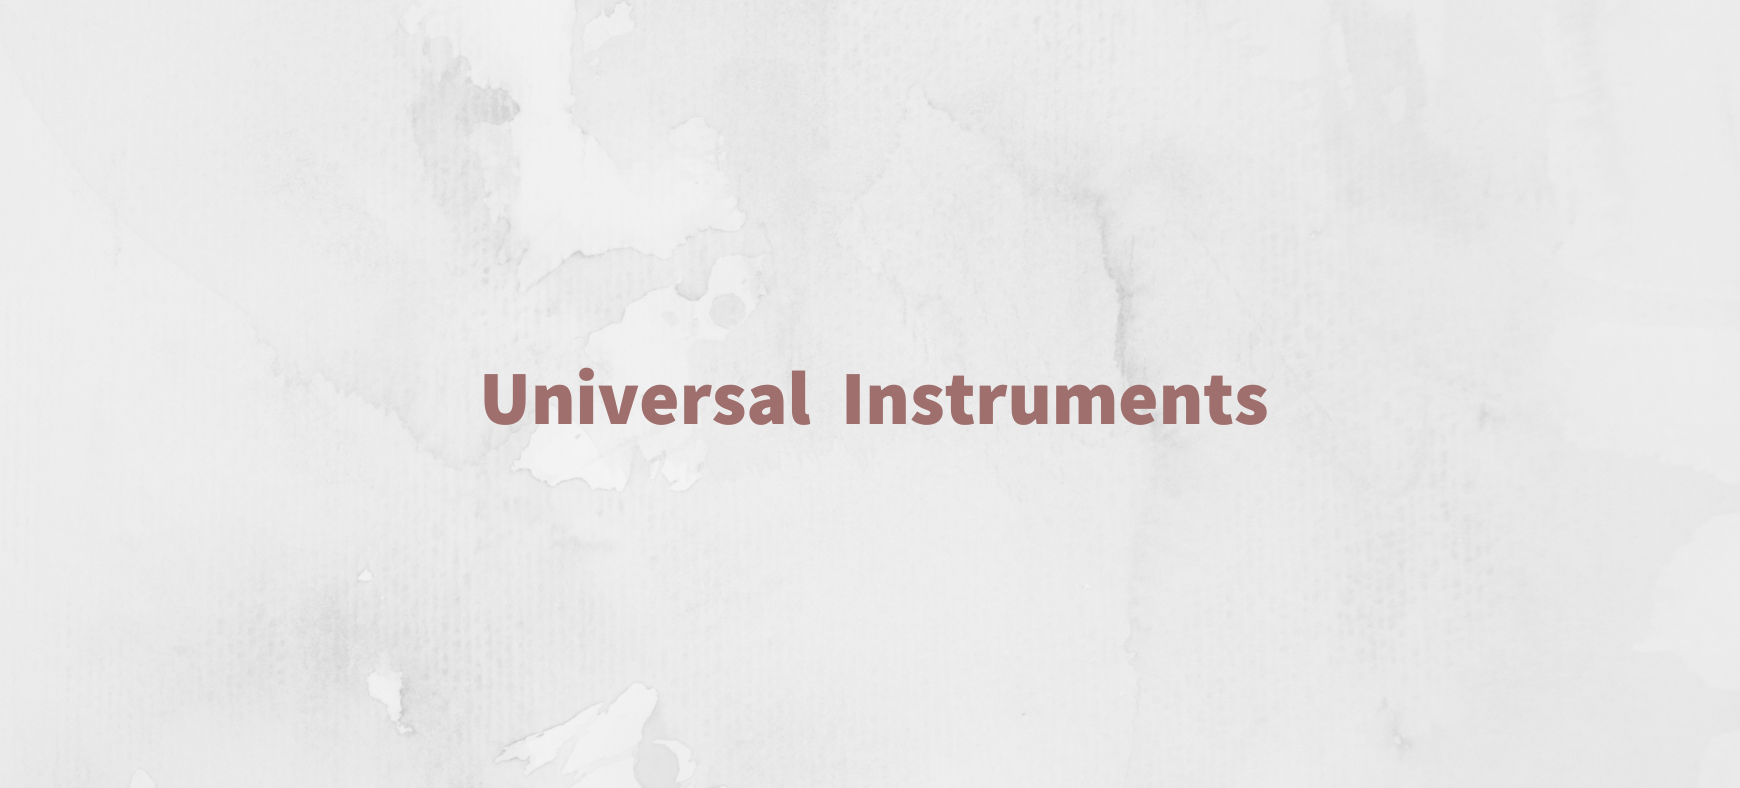 Universal Instruments